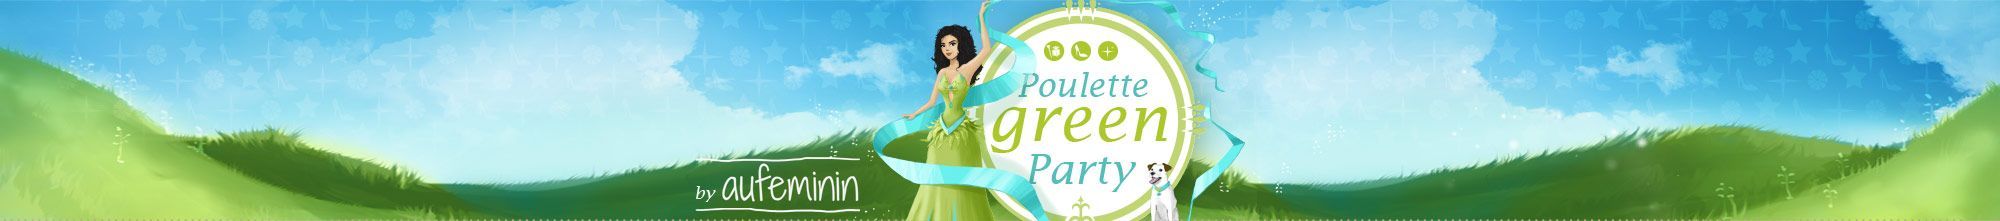 Poulette Green Party